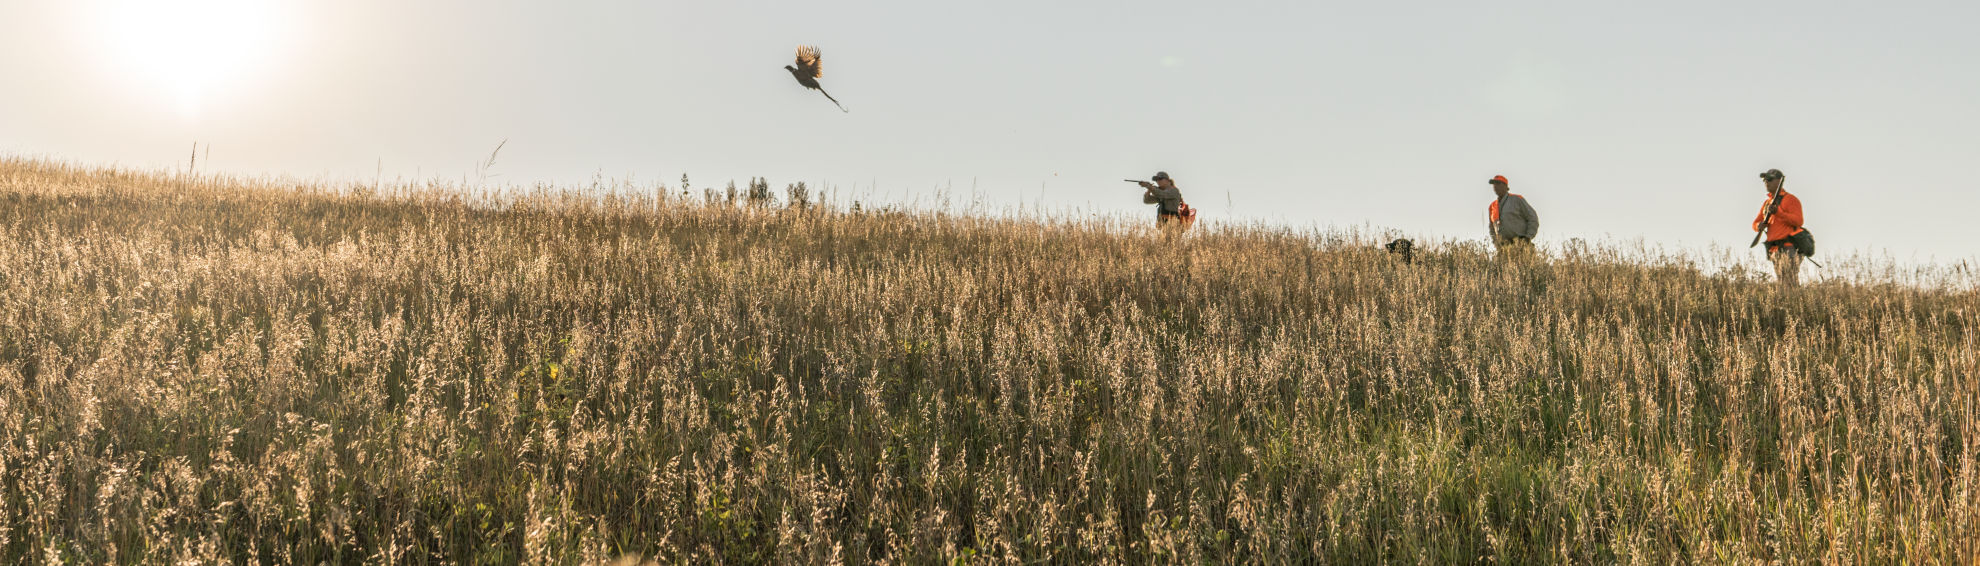 Group of hunters in an open field